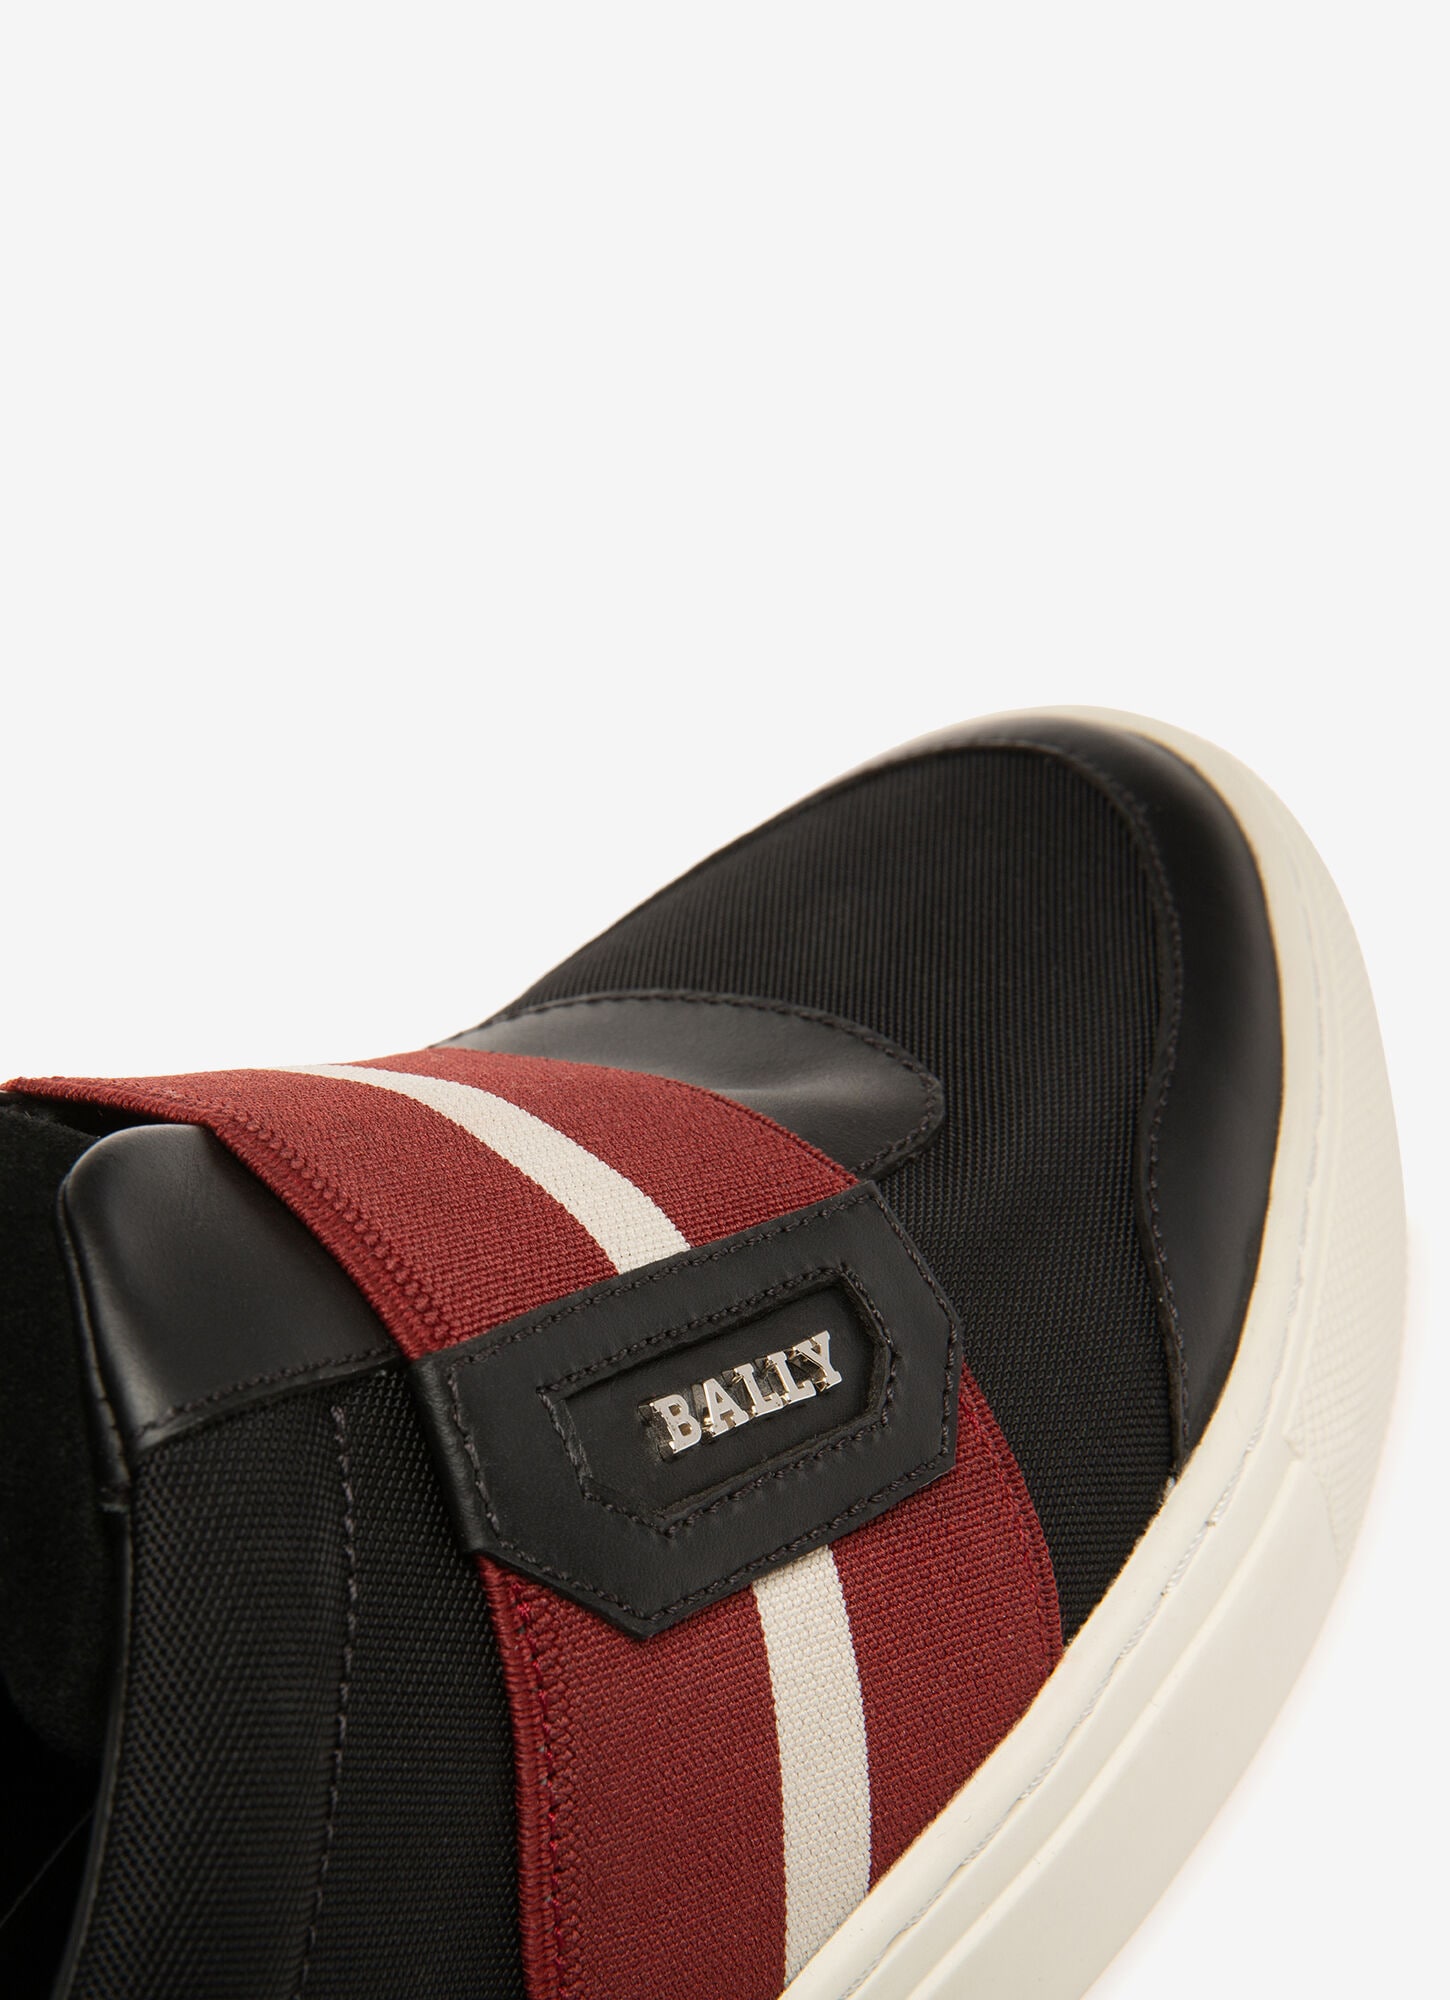 bally slip on sneakers